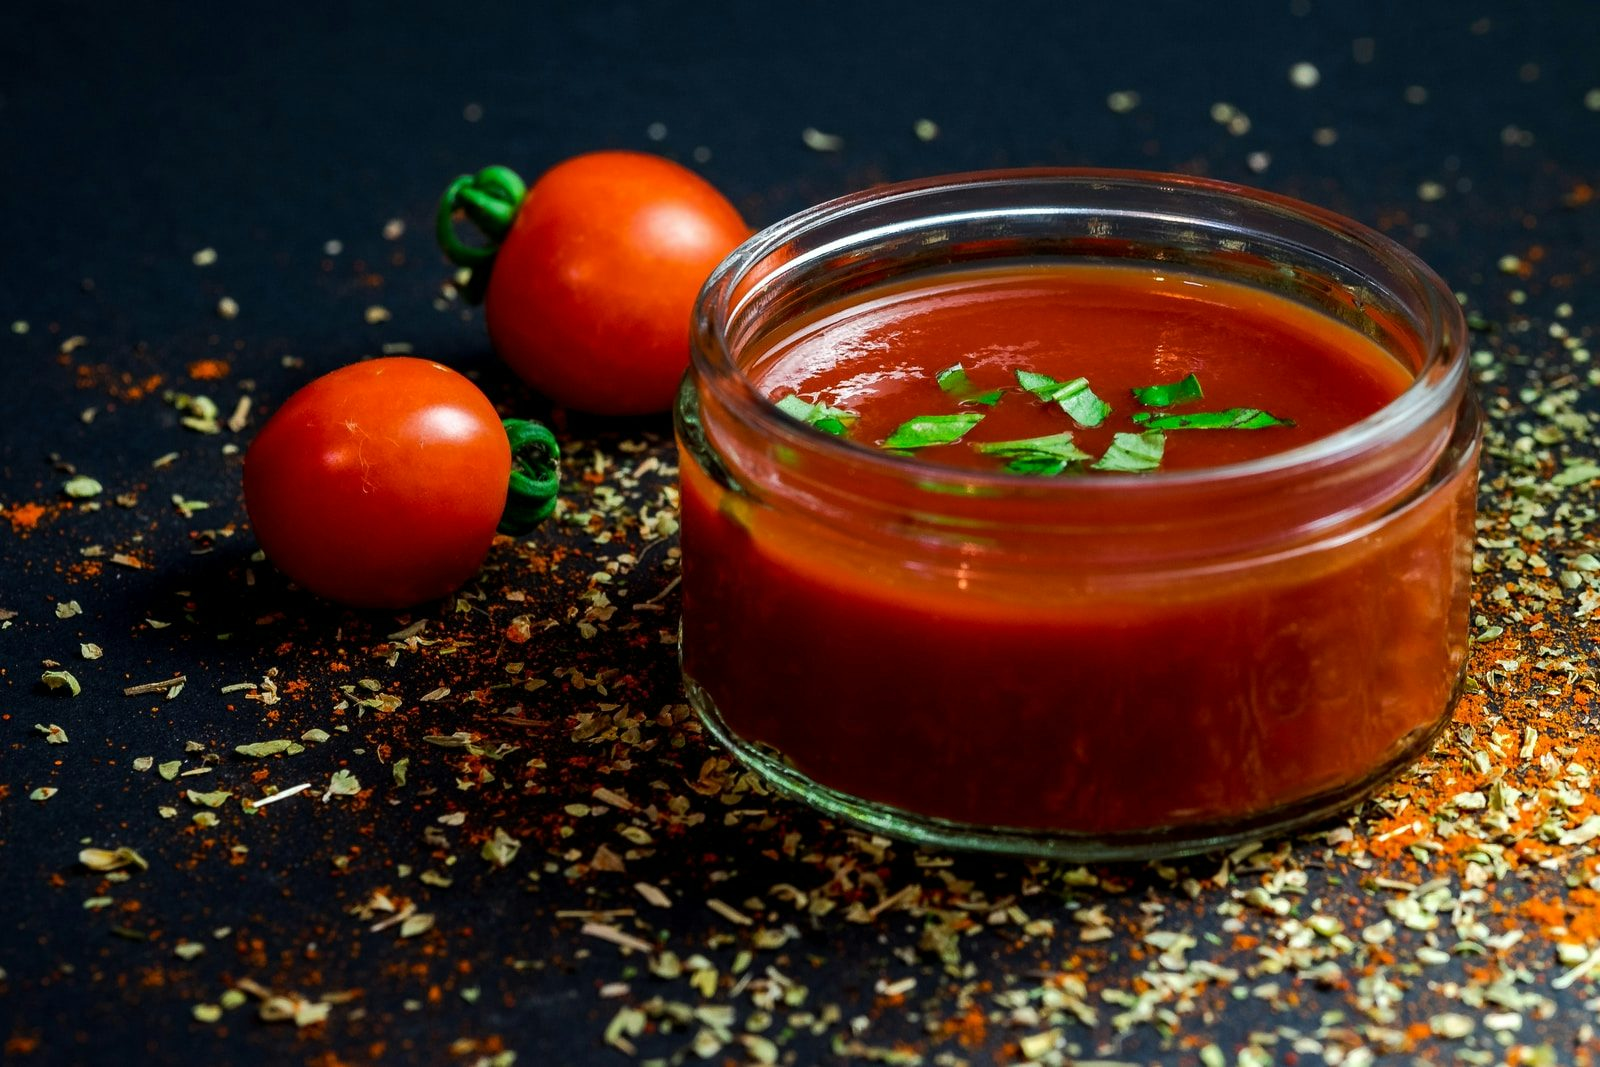 Tomato sauce mixing